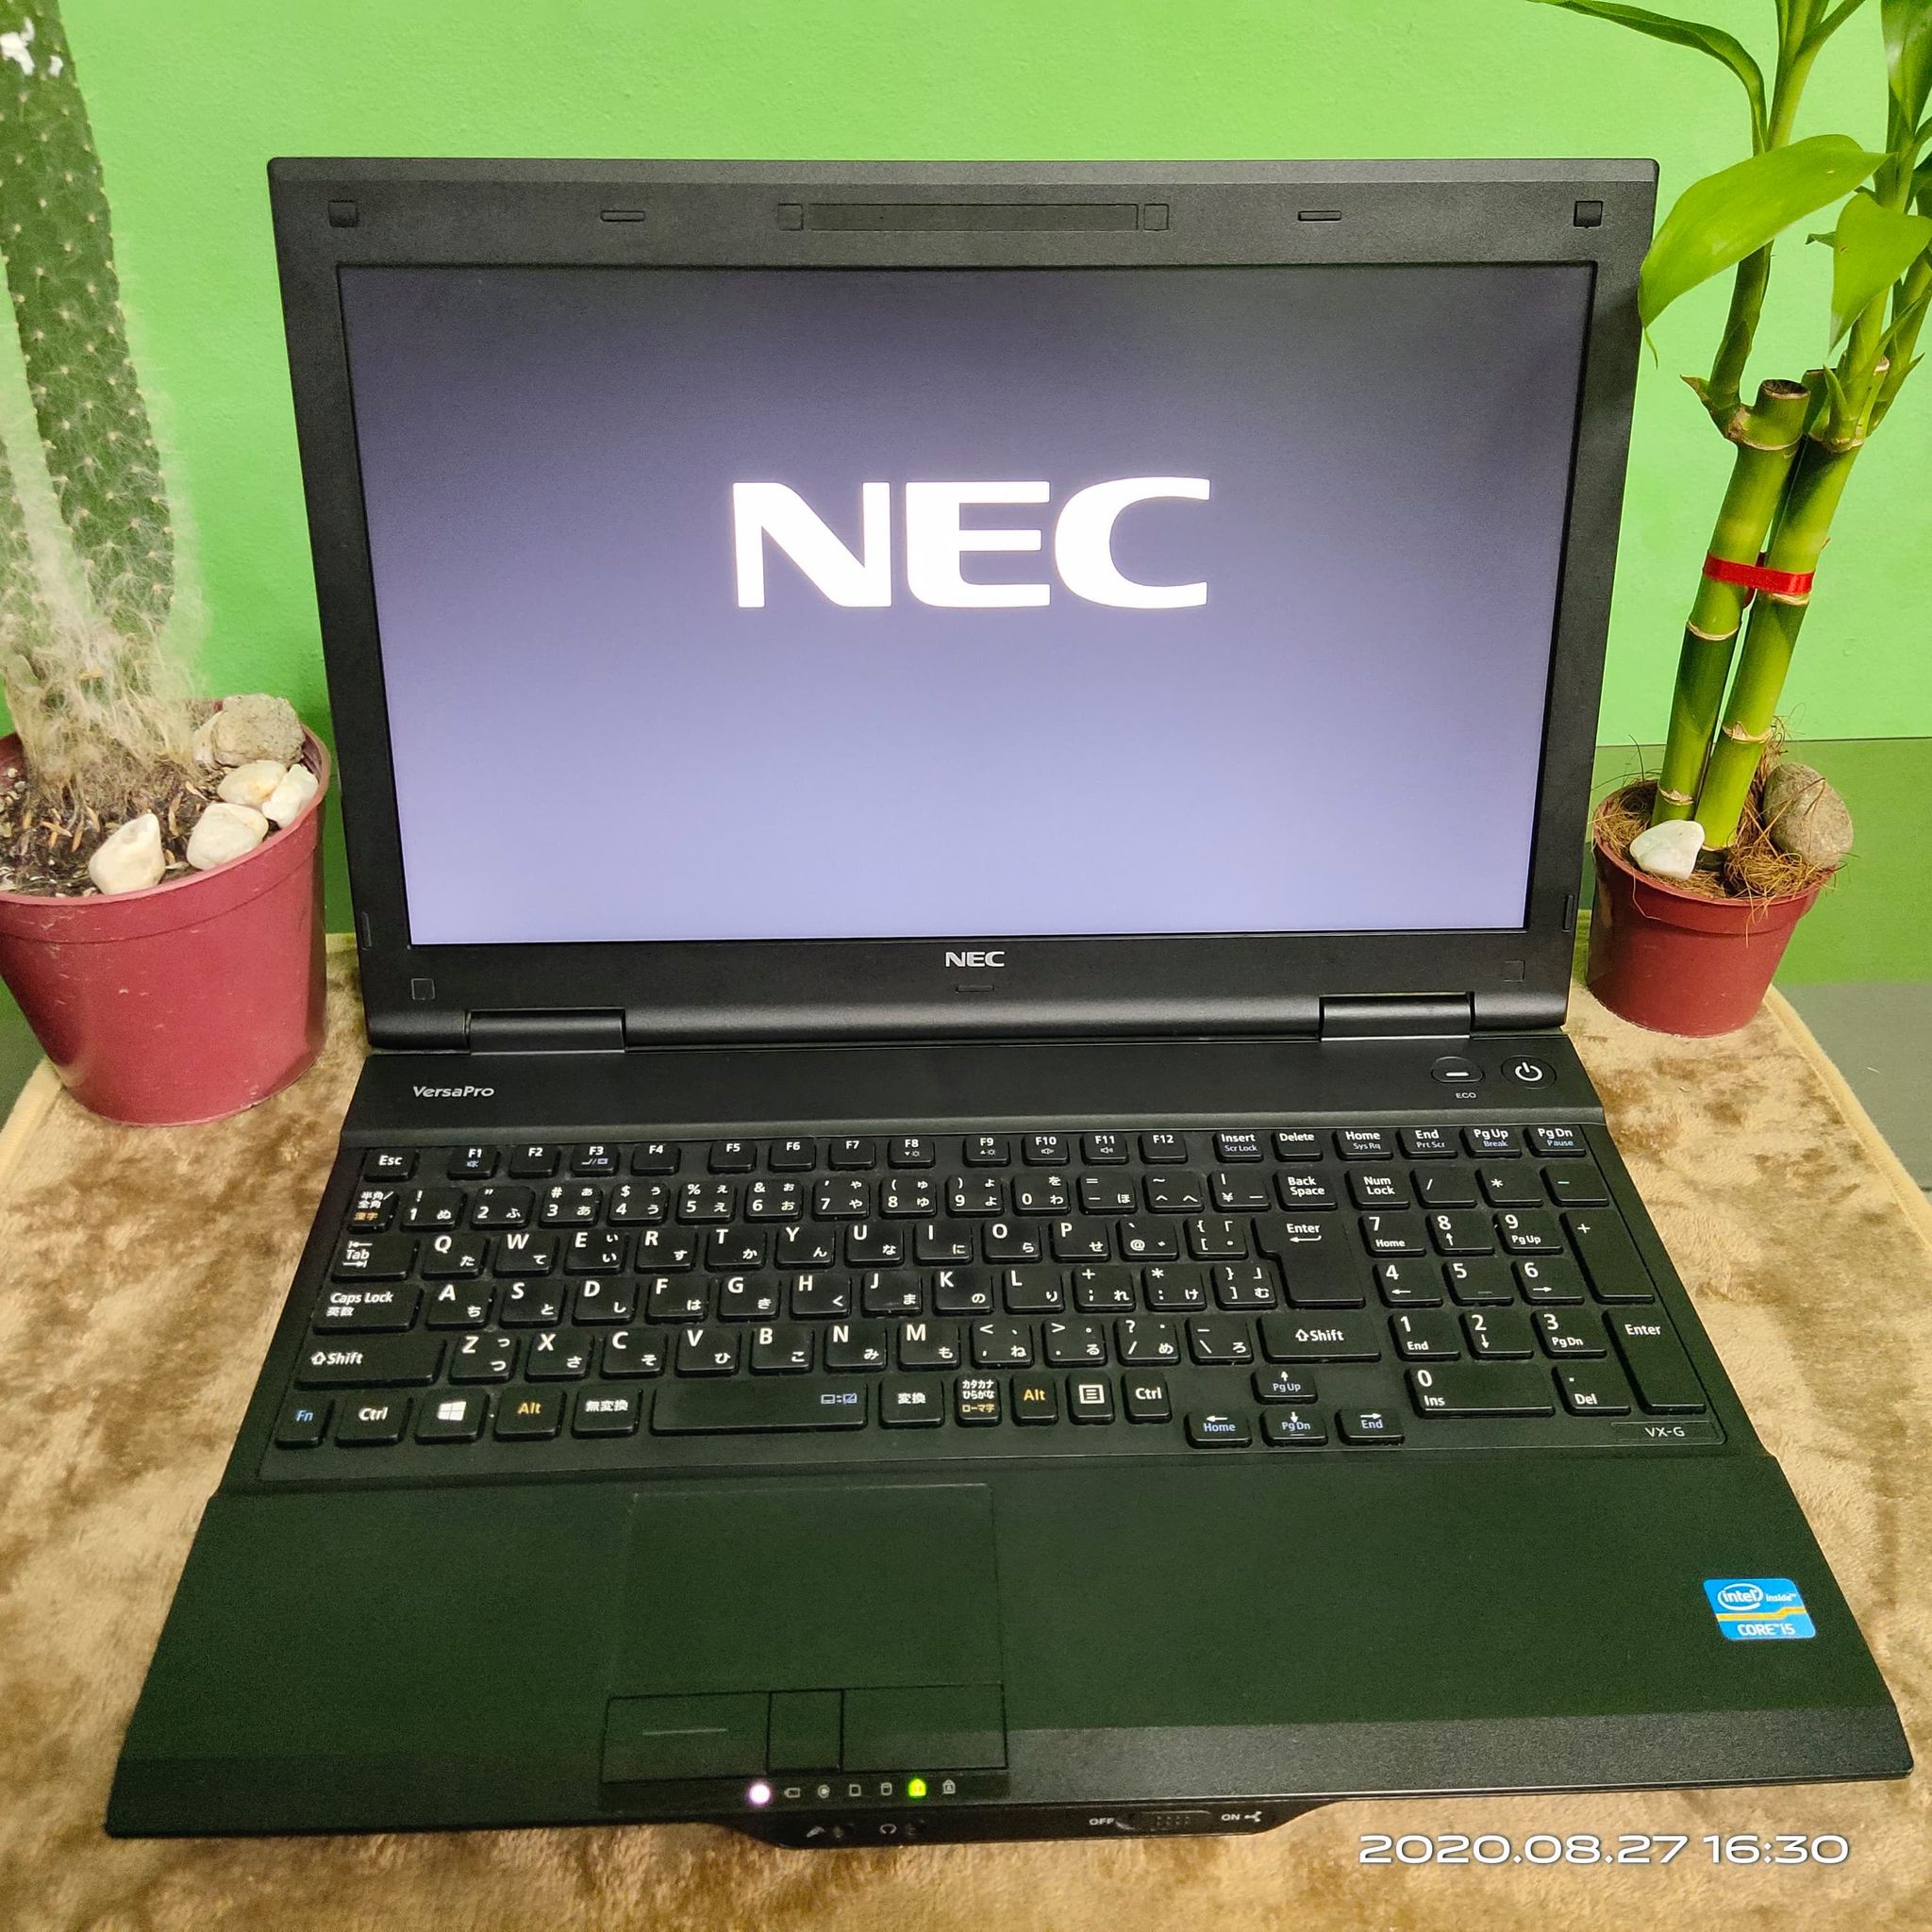 Nec versapro(3rd Gen) PC-VK26TXZDG Windows 10, Intel Core i5-3230M 